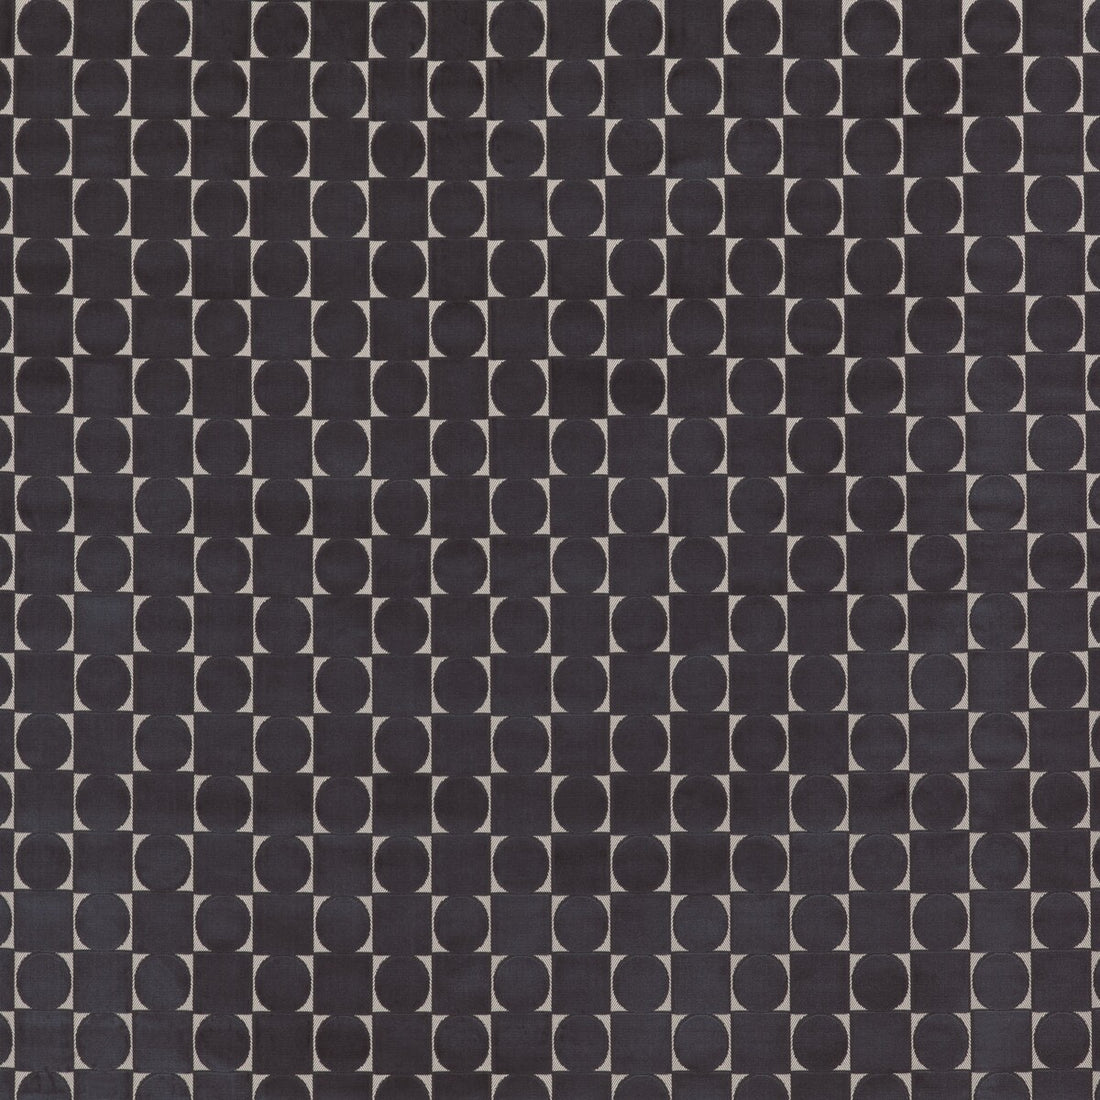 Luigi fabric in azul petroleo color - pattern LCT4453.001.0 - by Gaston y Daniela in the Lorenzo Castillo III collection